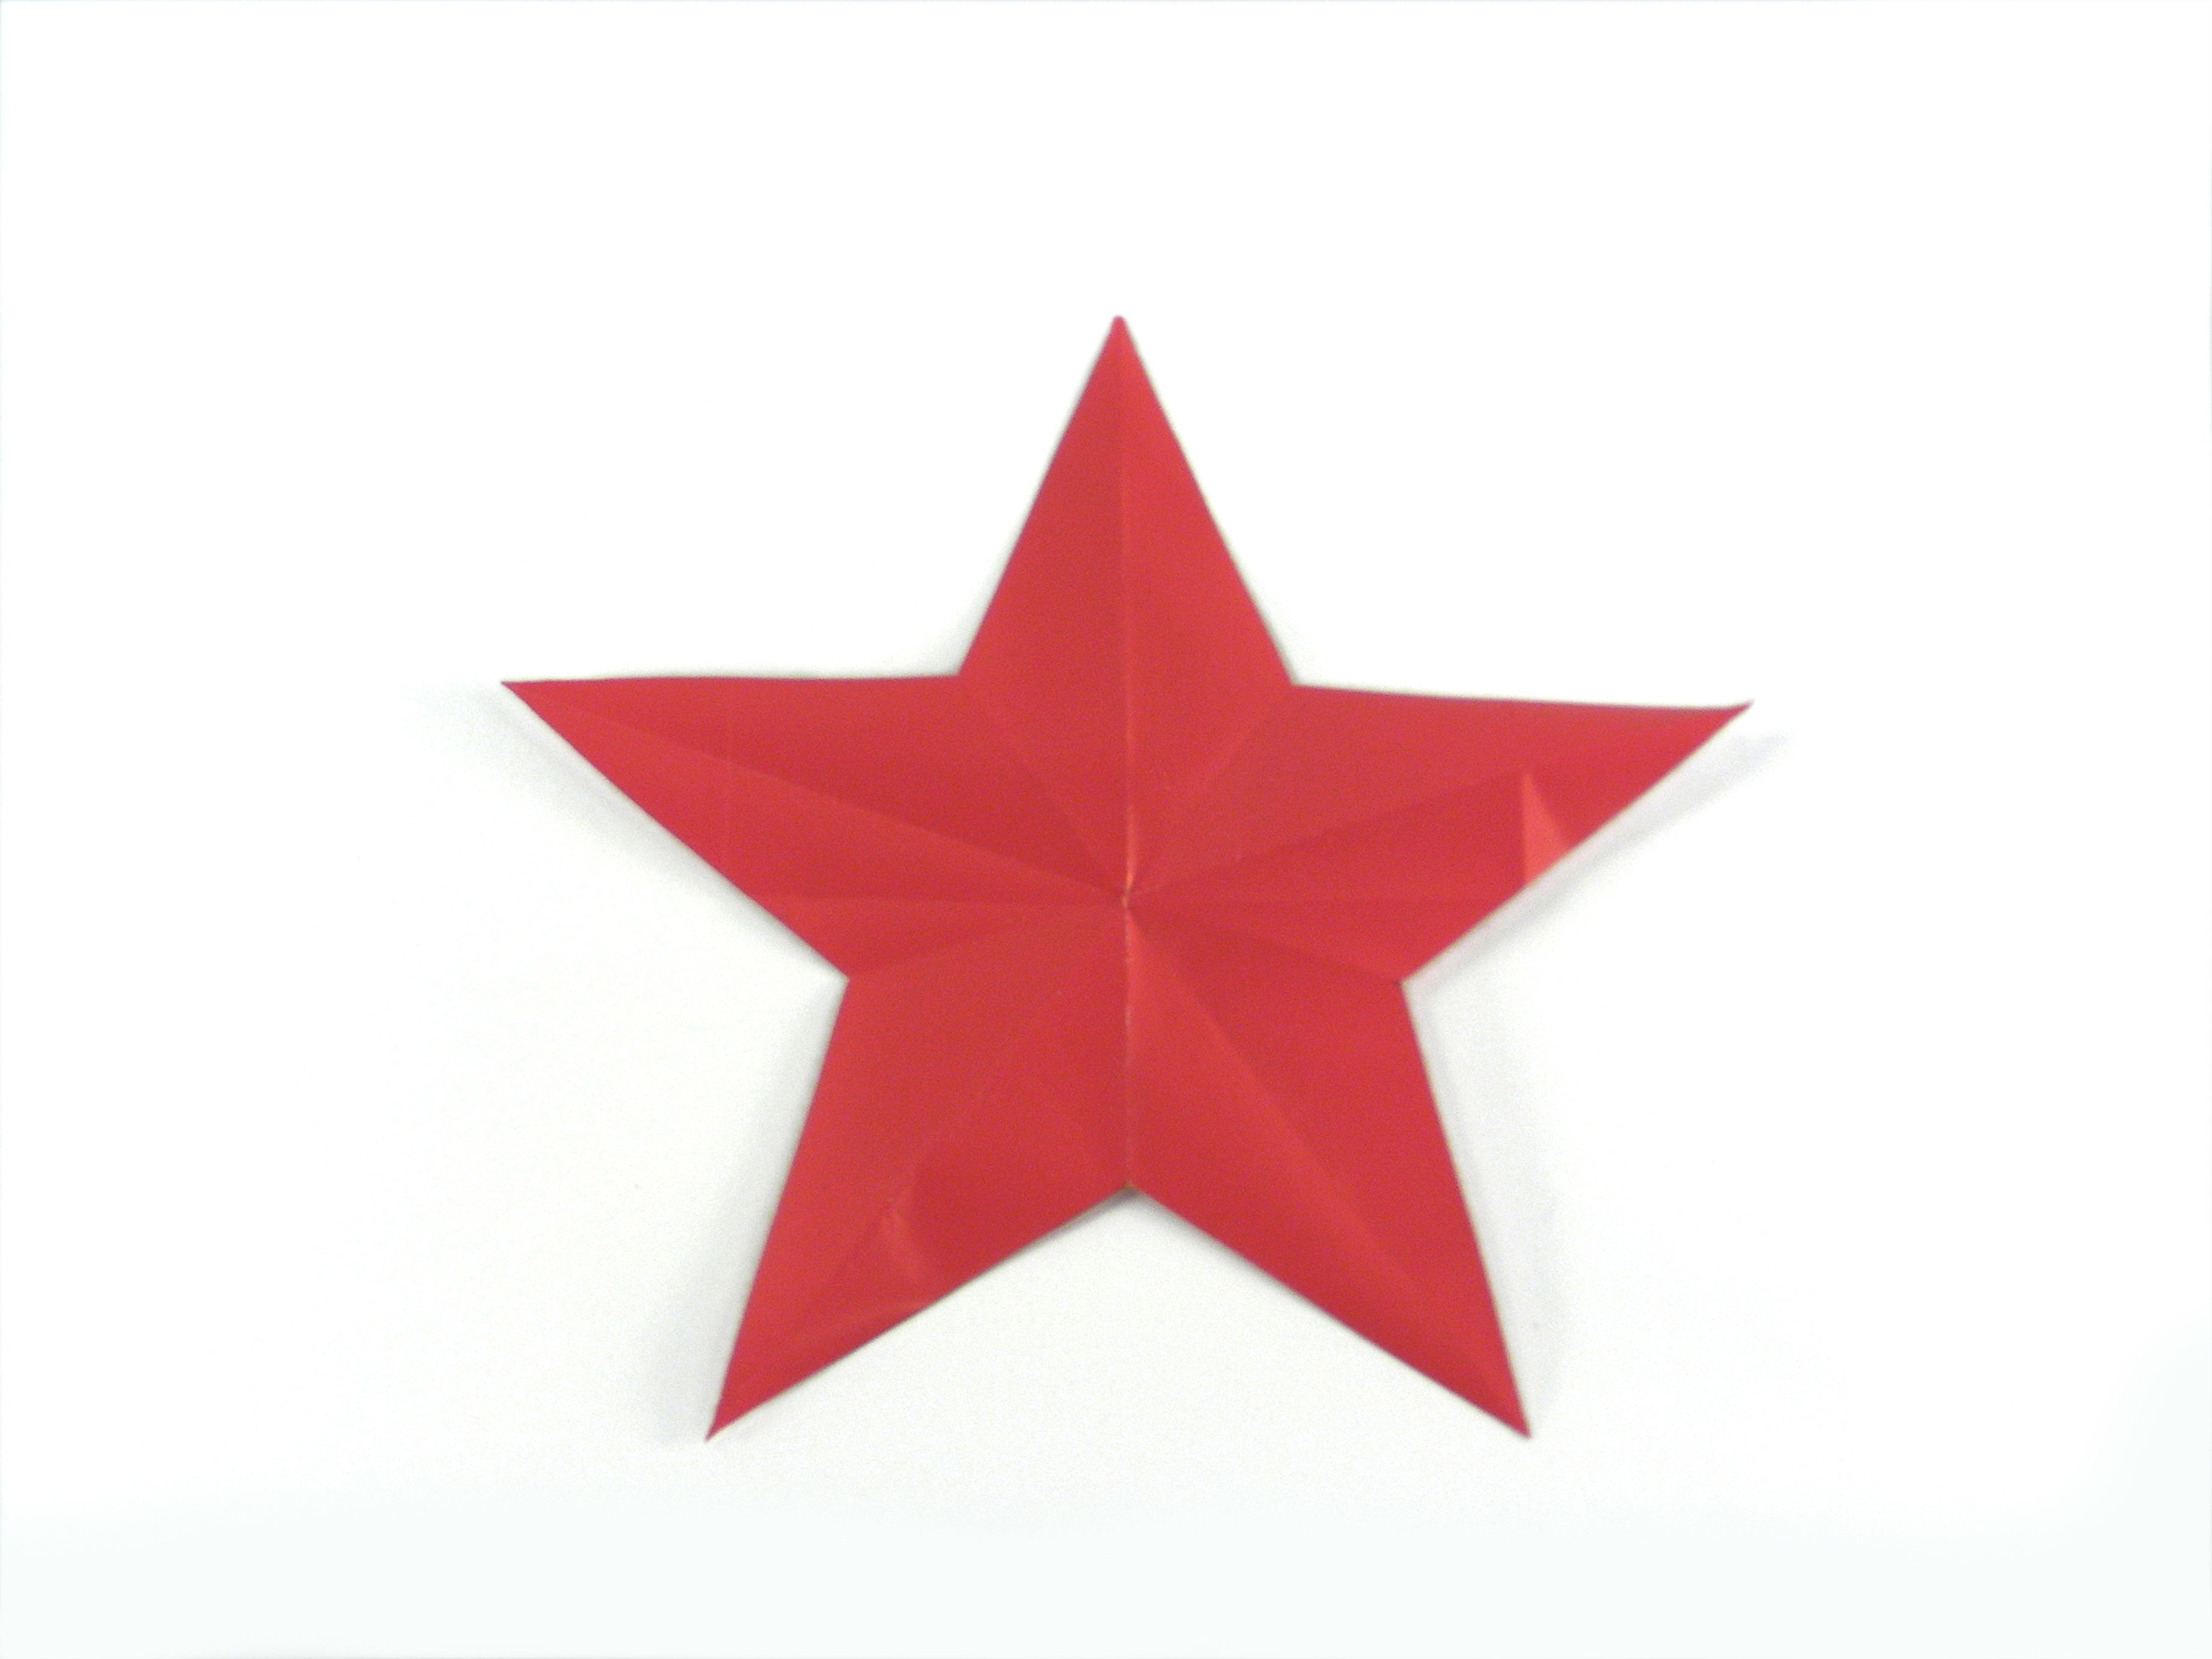 Golden Star Origami